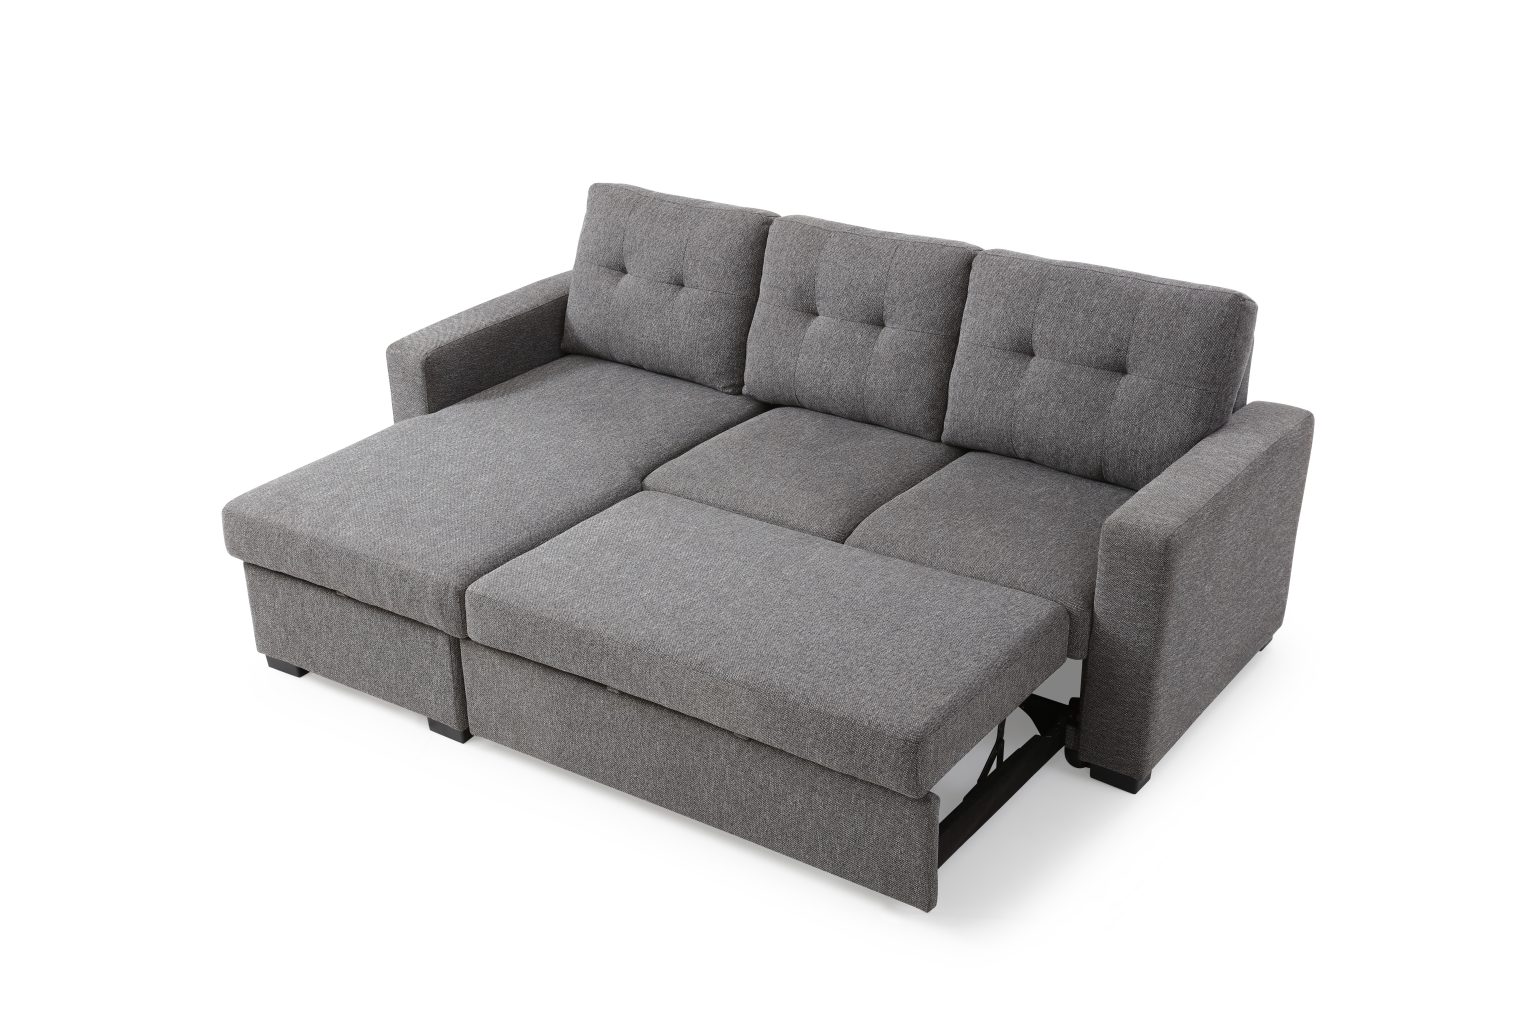 buy cheap sofa bed uk